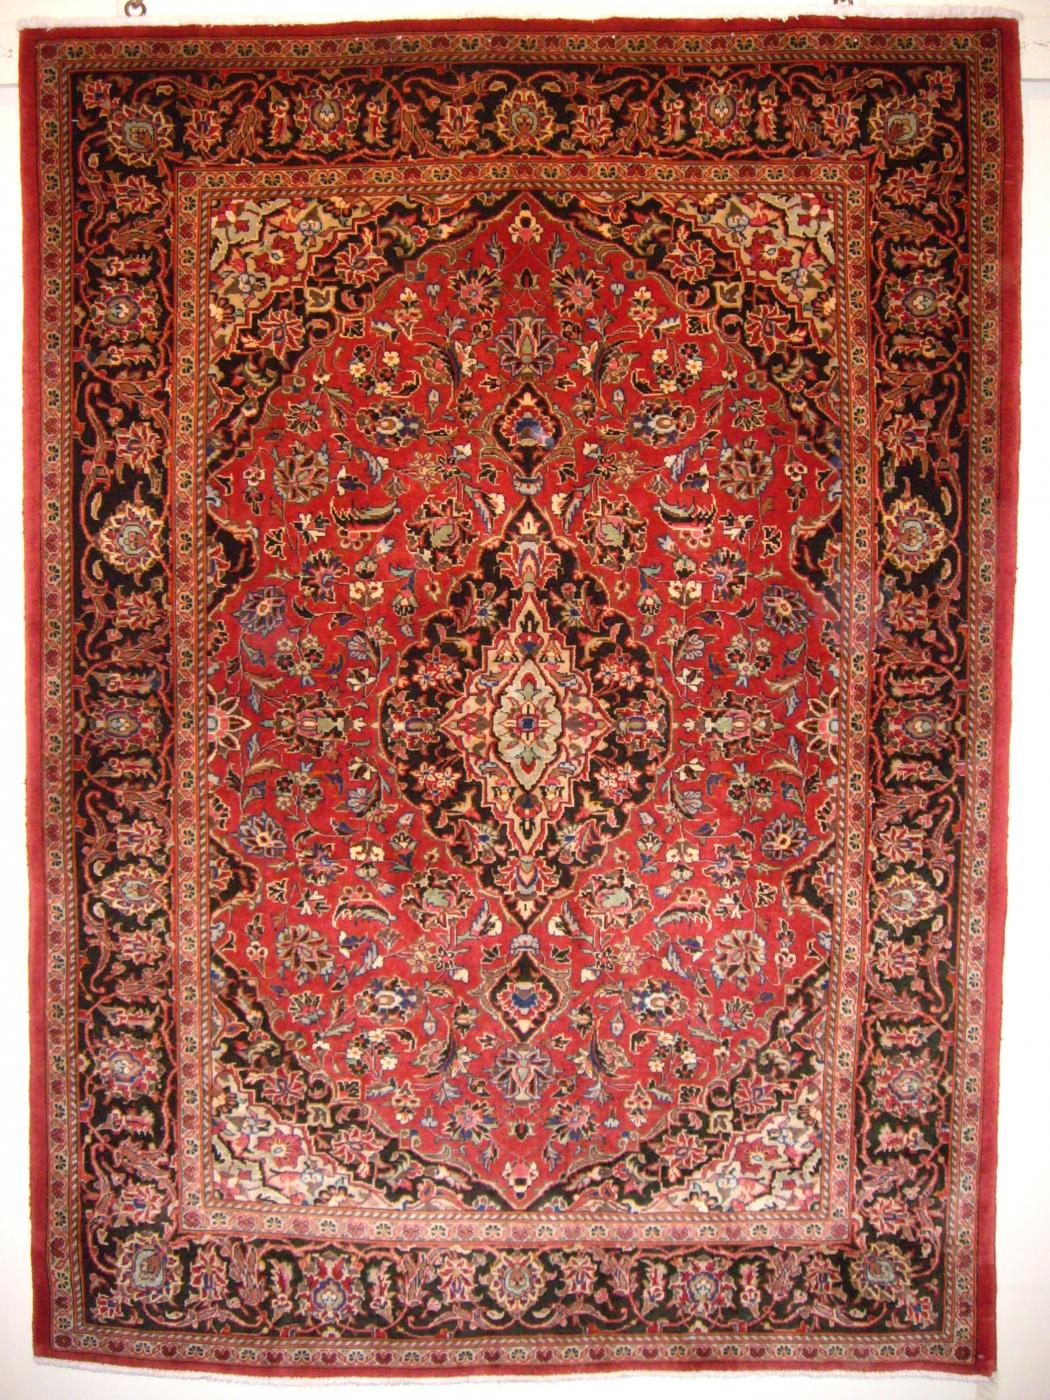 Old Persian Kashan | Nazar Rug Galleries Intl. - persian carpets sydney